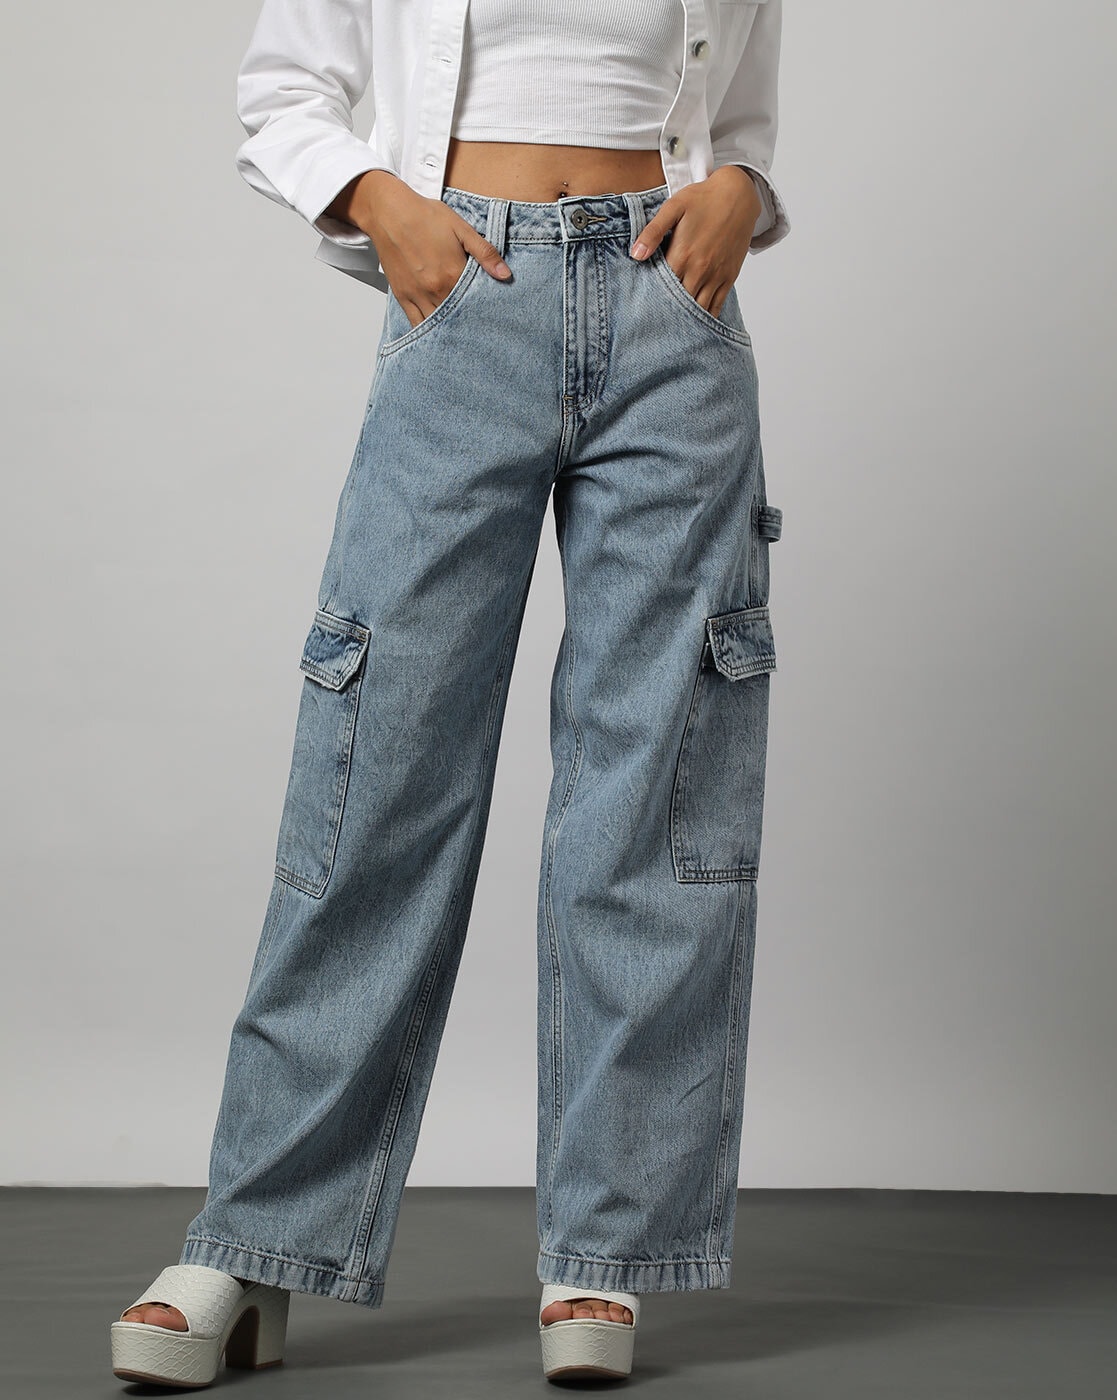 Buy Women Boyfriends Jeans High Waist Baggy Denim Pants Wide Leg Jeans  Loose fit Straight Jeans at Amazon.in